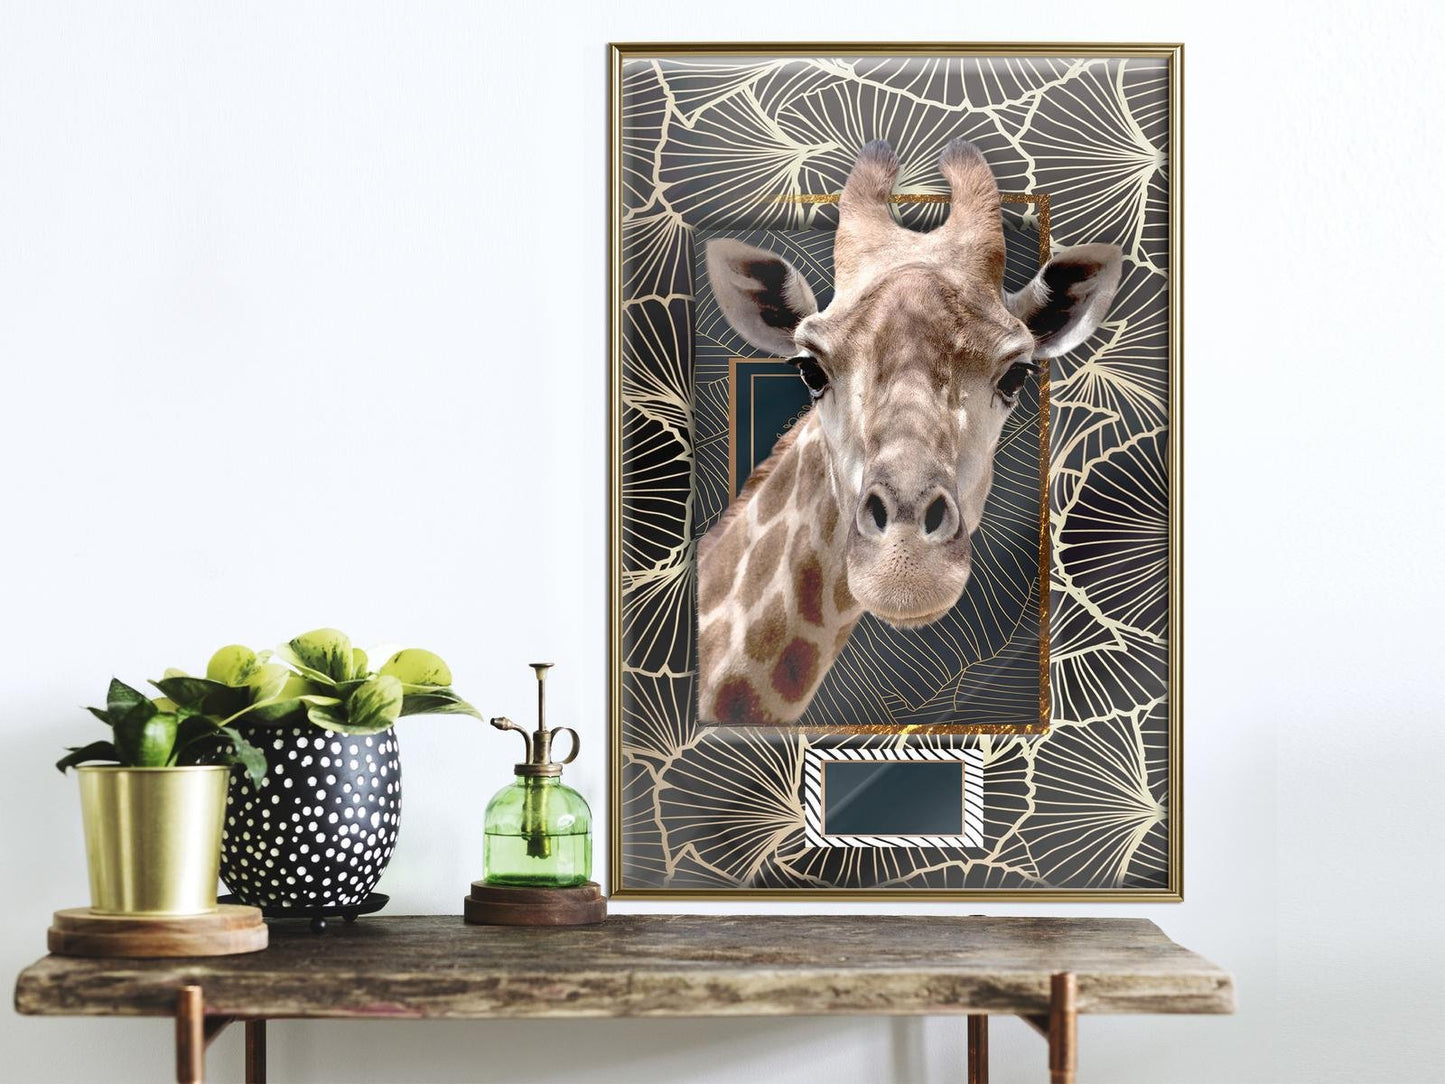 Giraffe in the Frame